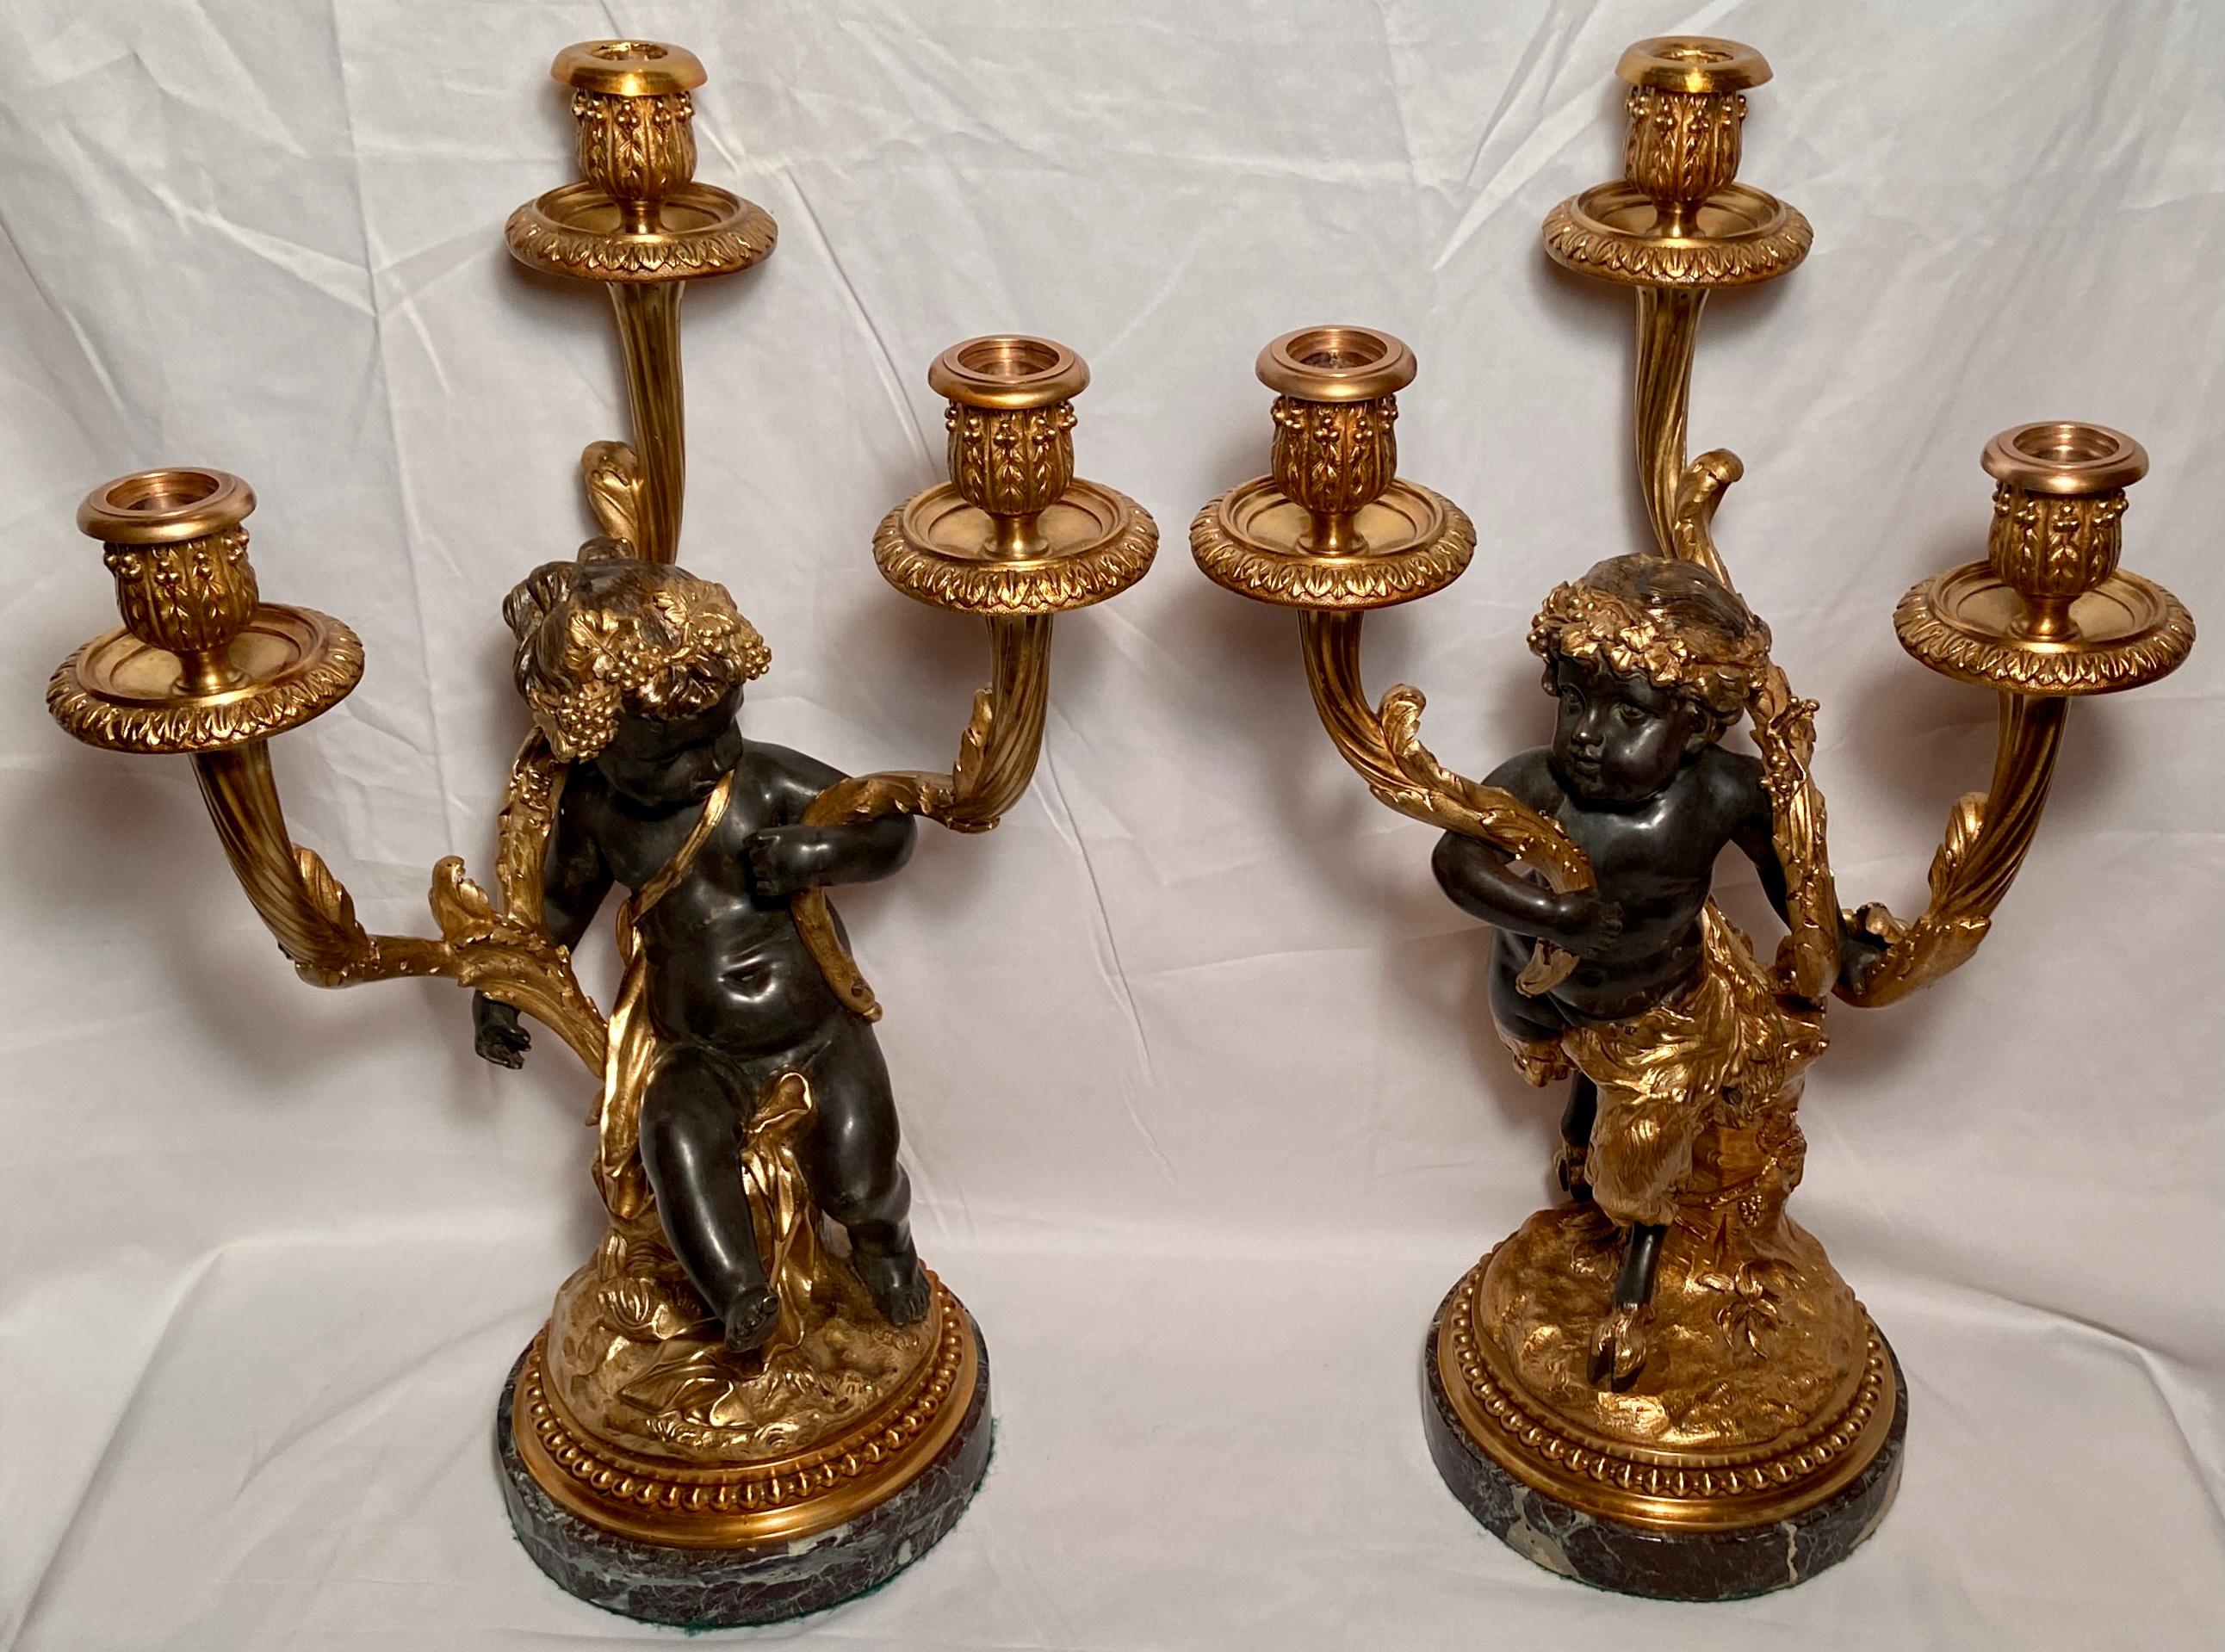 Pair antique French gold bronze bacchanalian figure candelabras, circa 1870-1880.